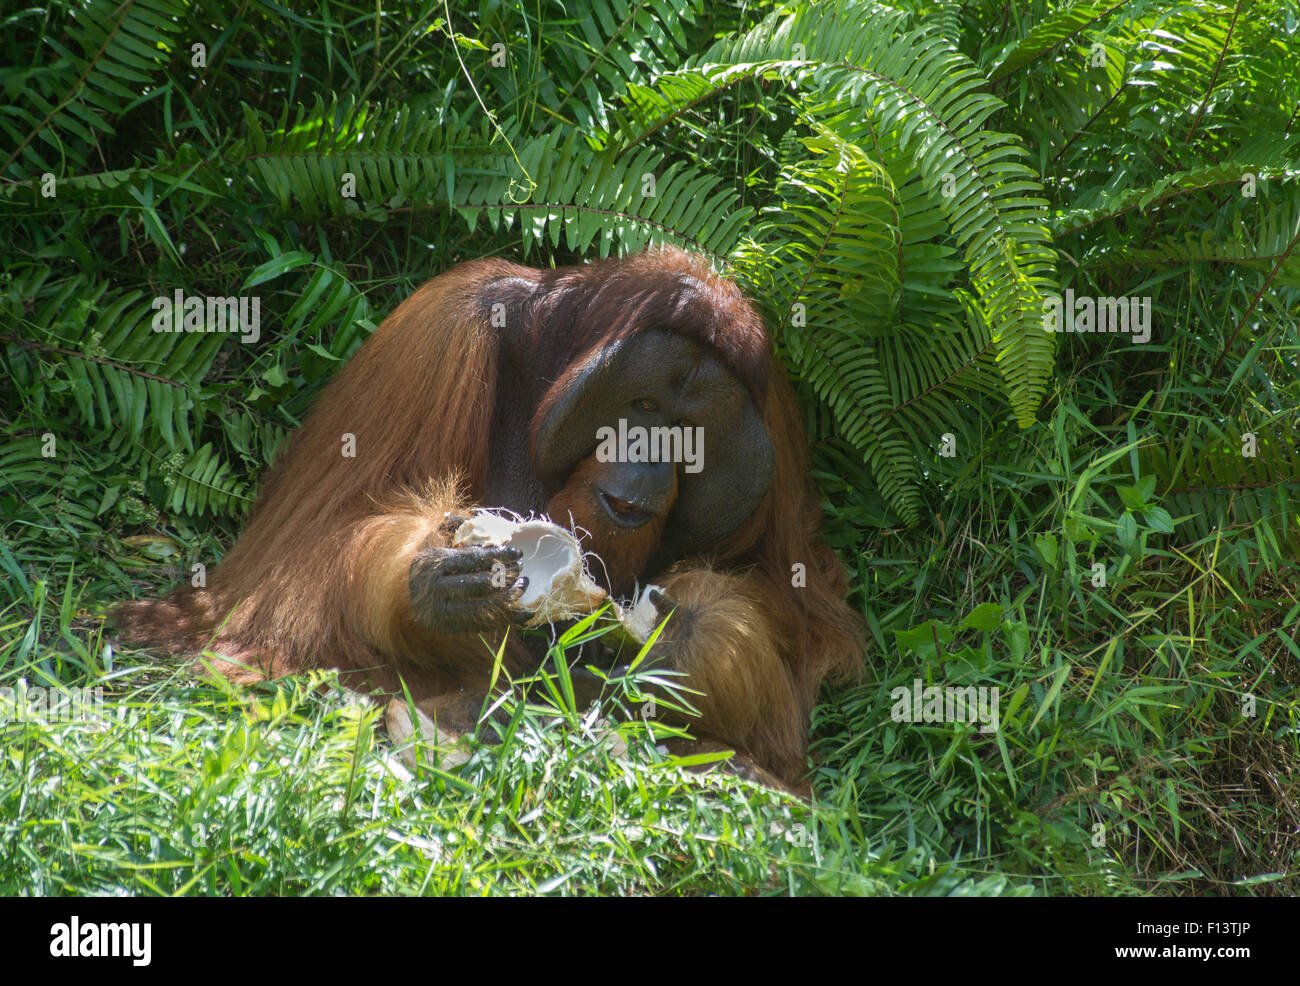 Flanged male Bornean orangutan eating a coconut Stock Photo